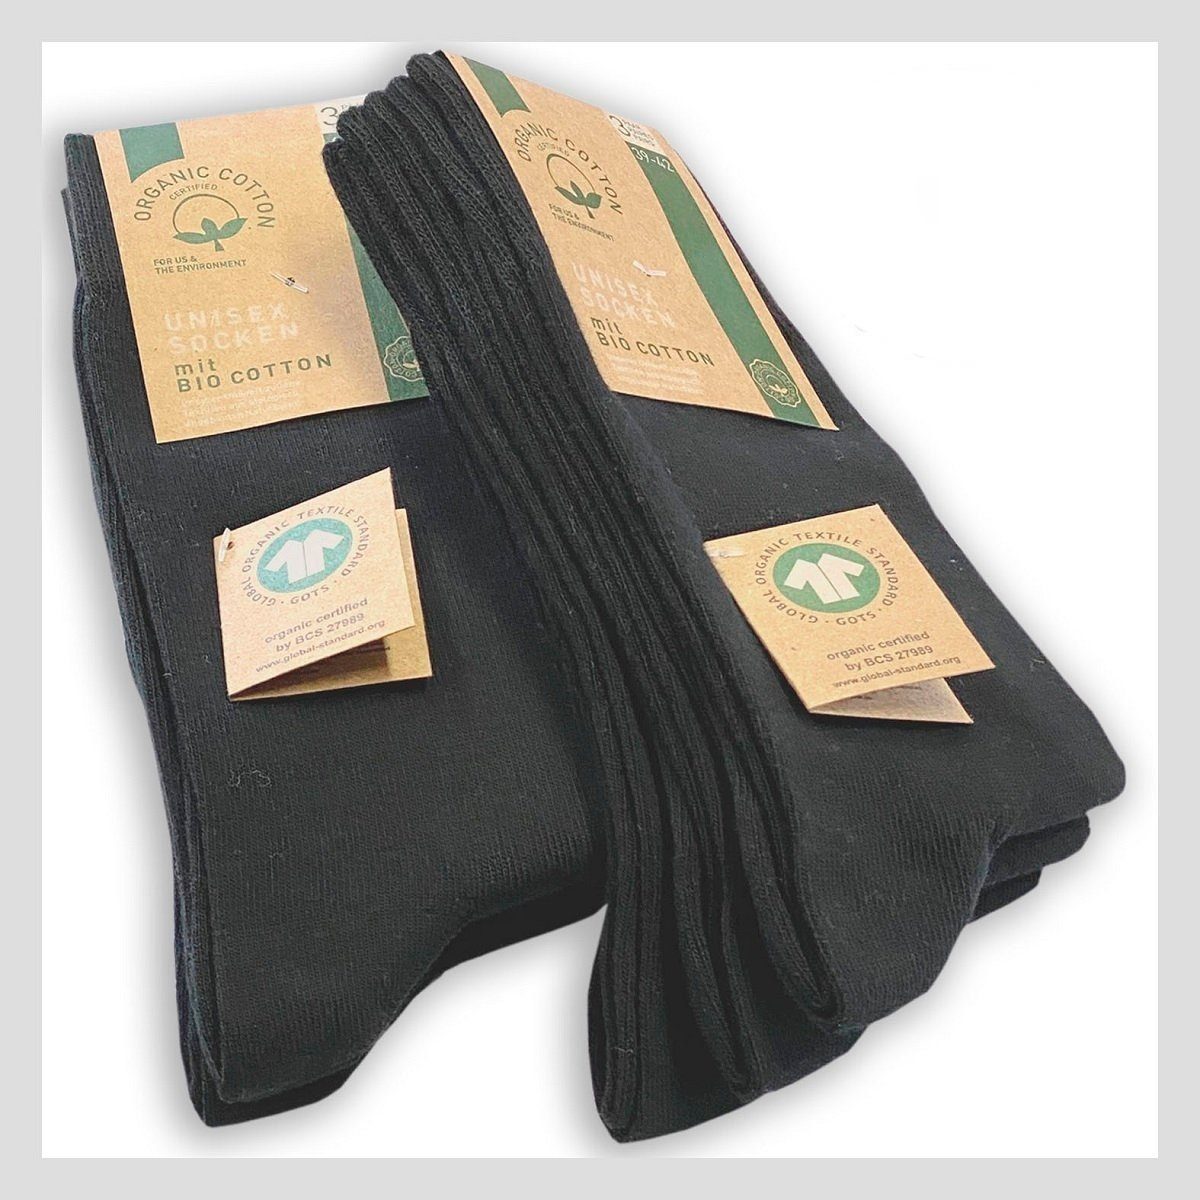 Sockswear Gesundheitssocken Bio-Baumwollsocken 98% 3er Bündel (3-Paar, 3 Paar) 3-er Pack schwarz